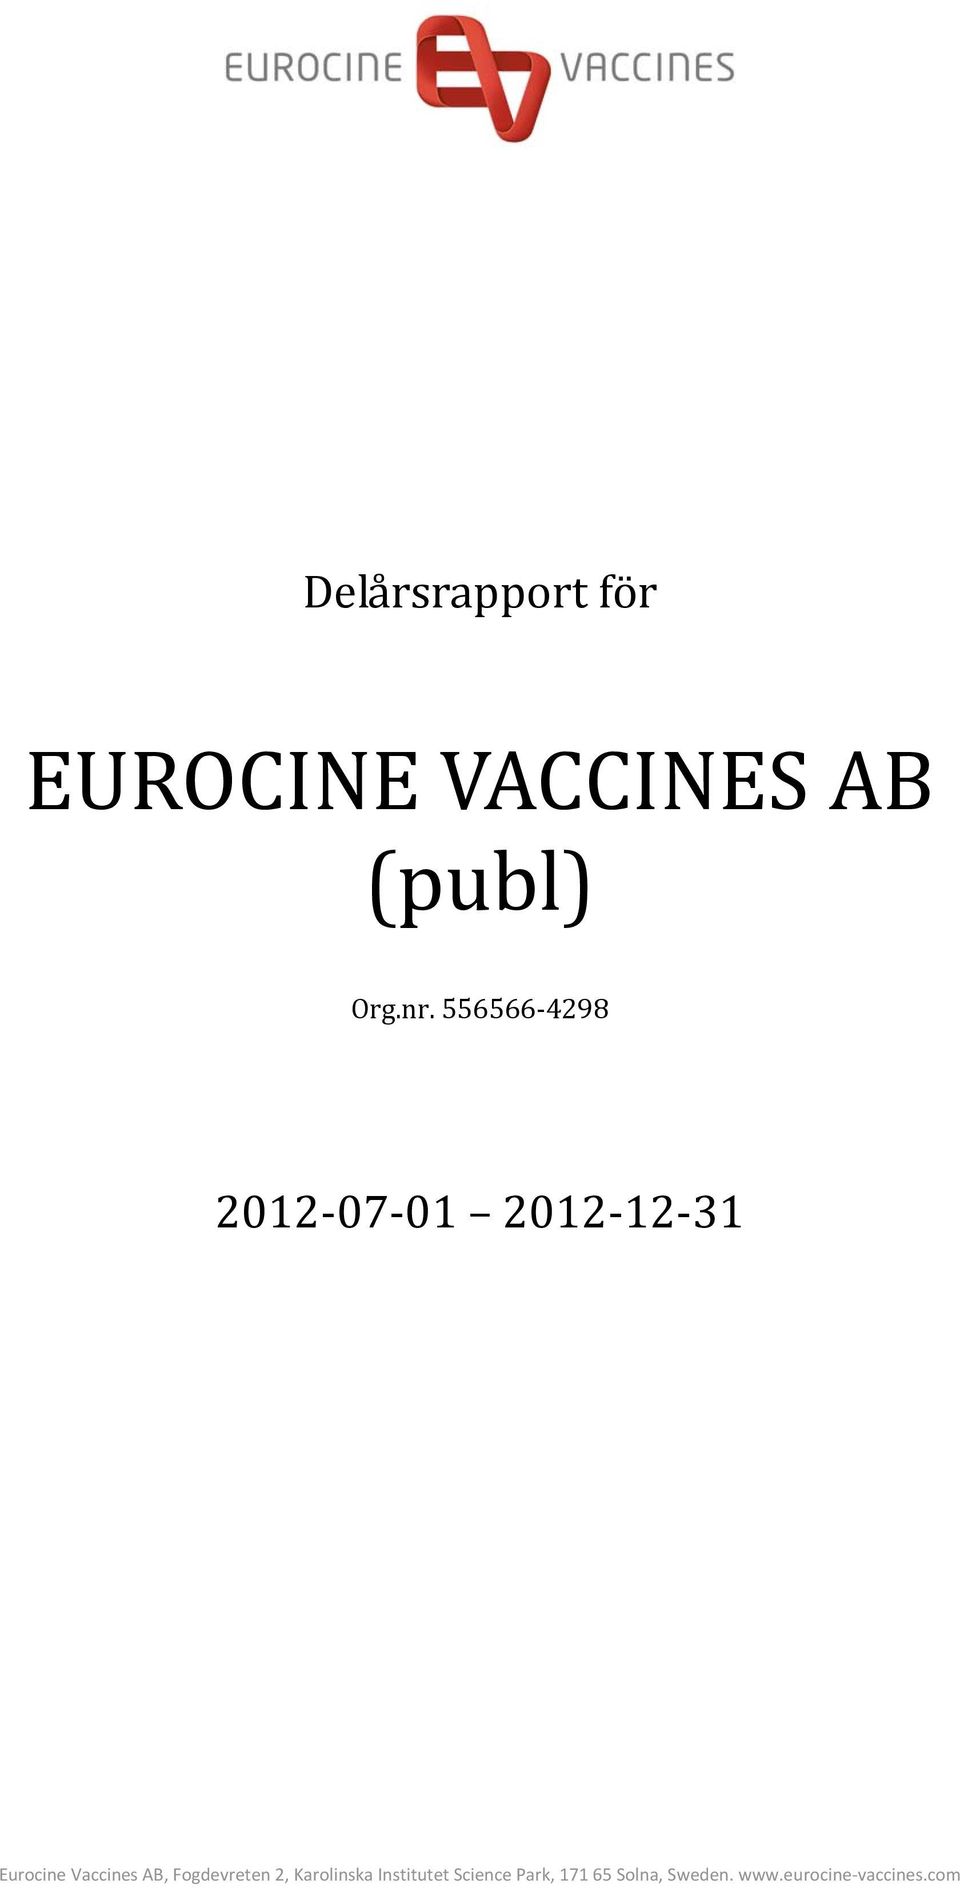 Vaccines AB, Fogdevreten 2, Karolinska Institutet